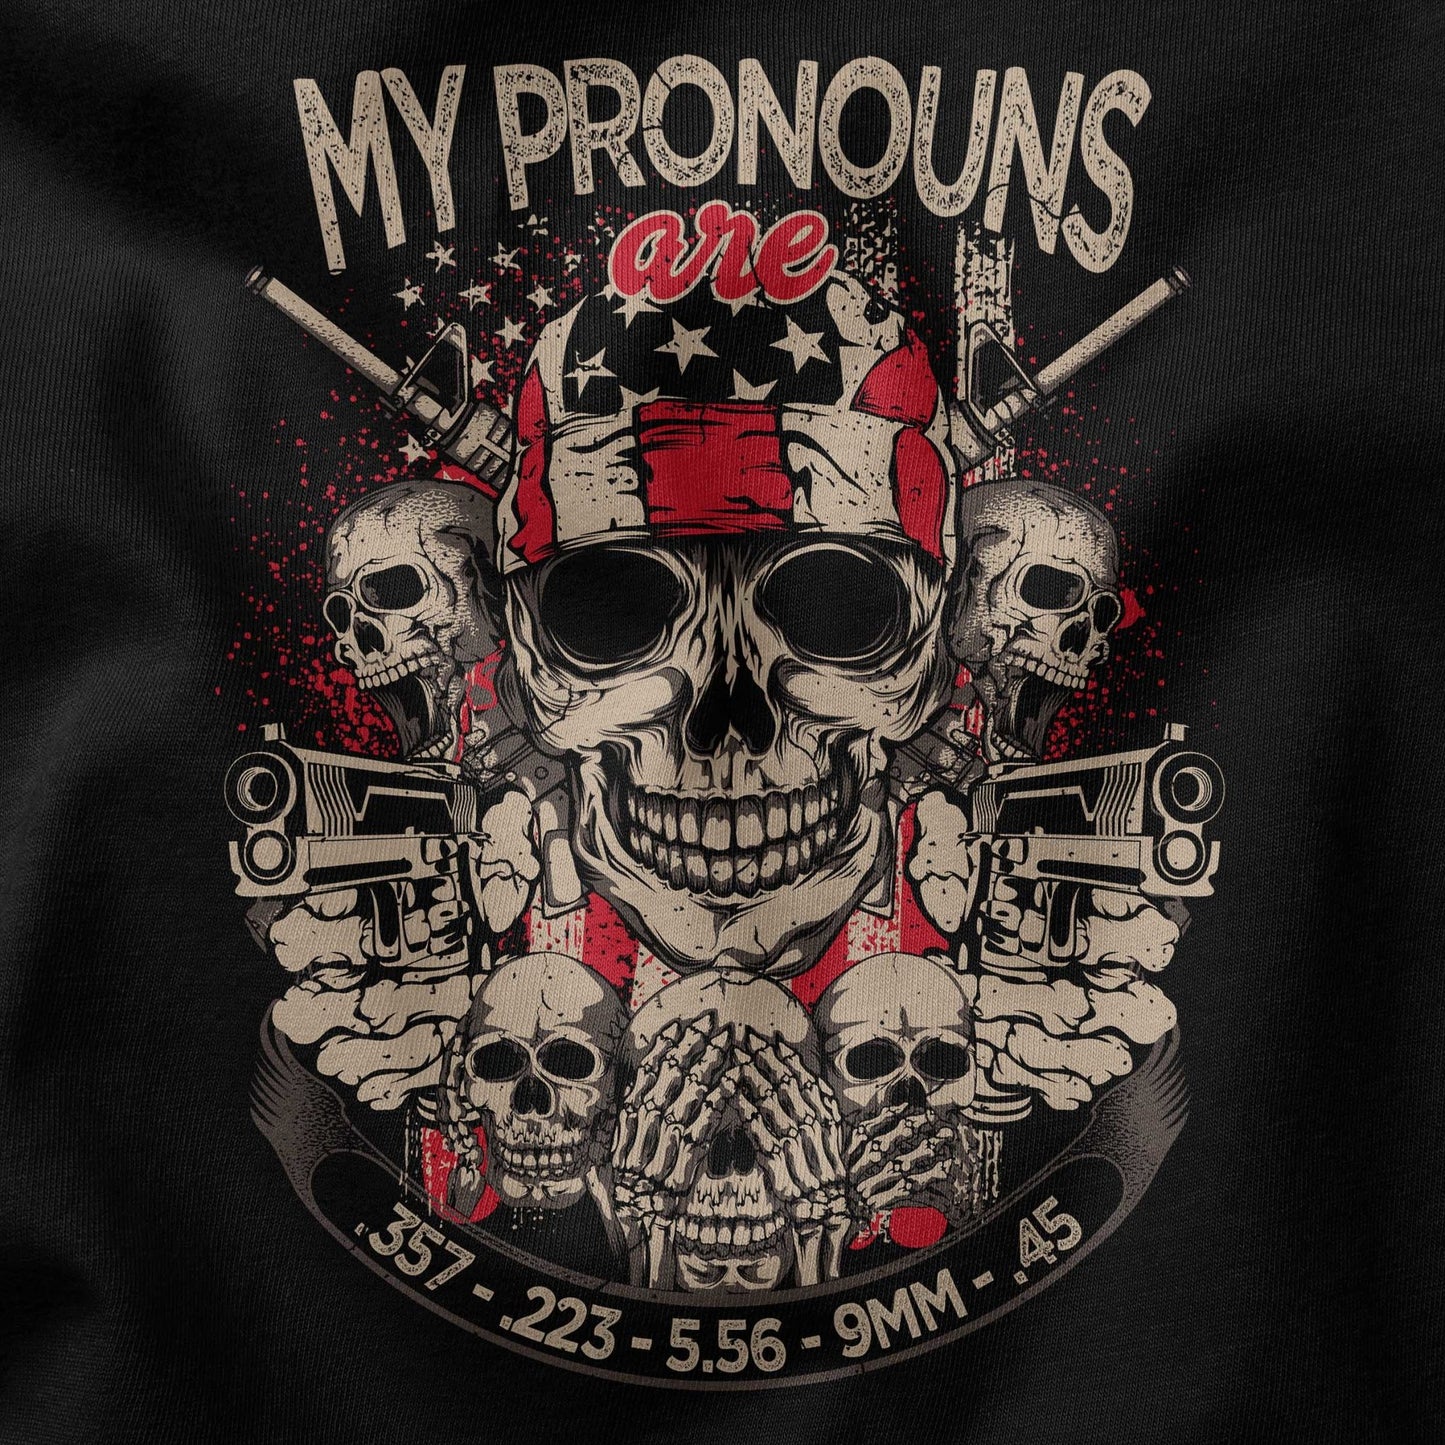 My Pronouns t-shirt - ArmedAF